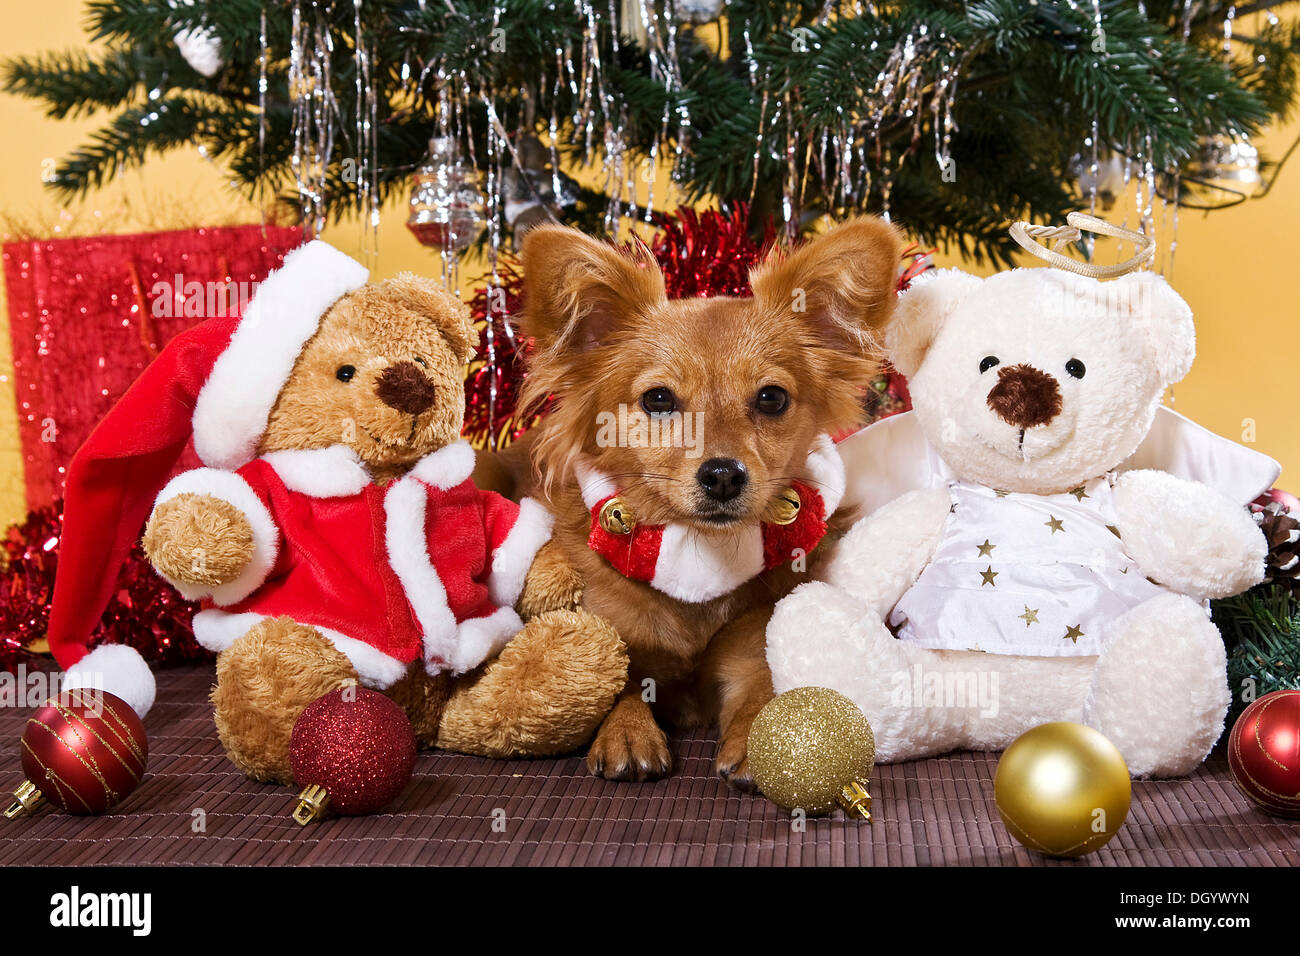 Half-breed dog lying under a Christmas tree between two Teddy bears Stock Photo